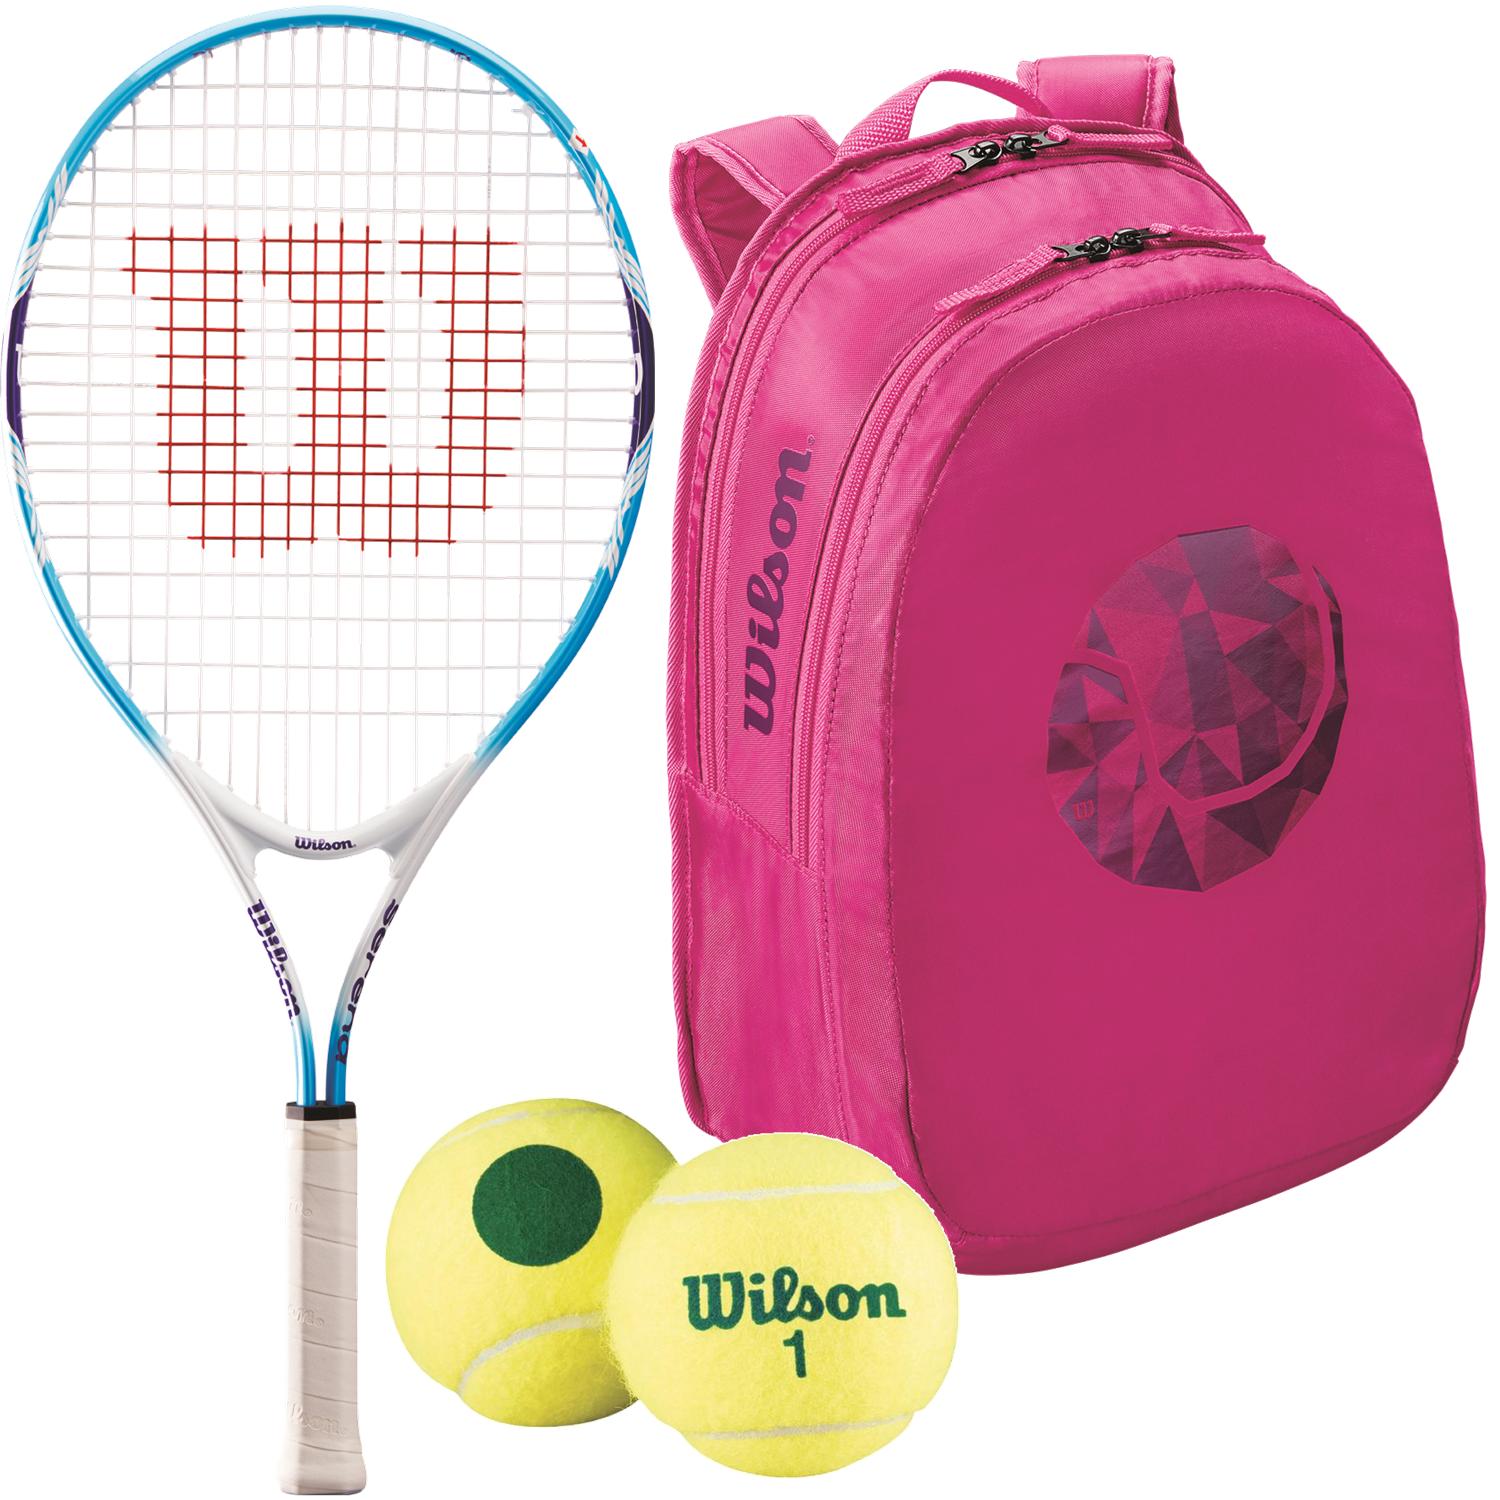 Wilson Serena Williams Junior Tennis Racquet, bundled with a Pink Junior Tennis Backpack and a 3-Pack of Green Dot Transition Tennis Balls